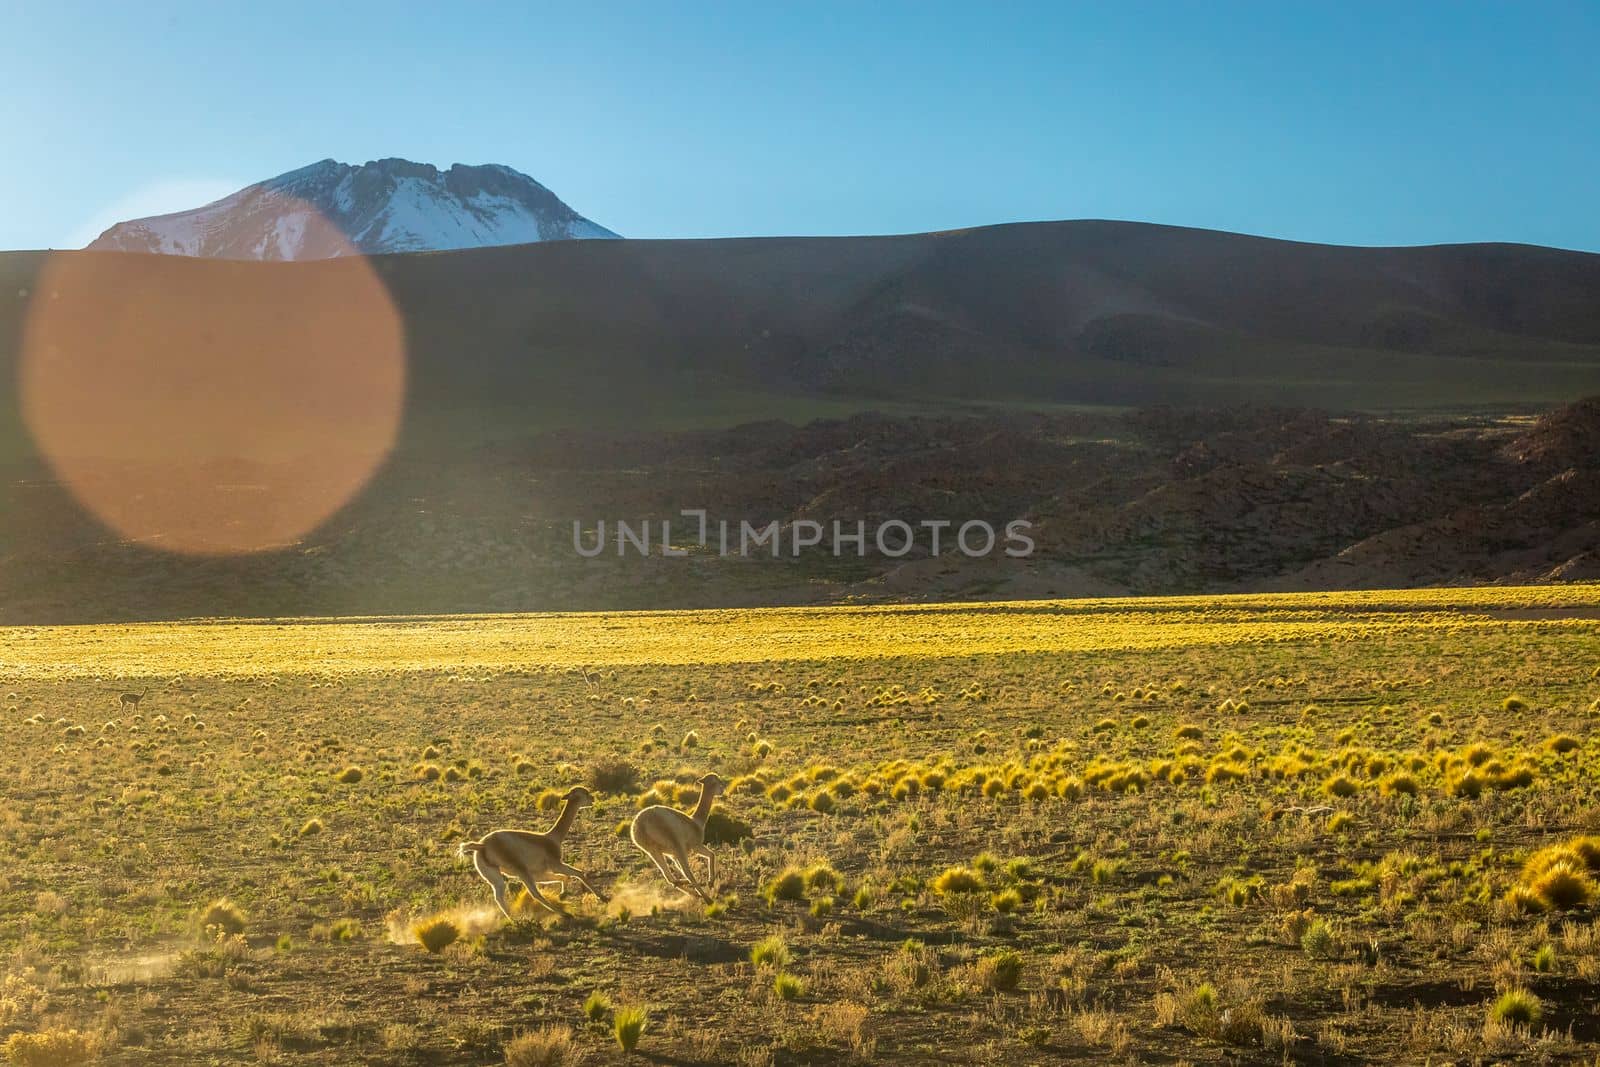 Guanaco vicuna in Bolivia altiplano near Chilean atacama border, South America by positivetravelart